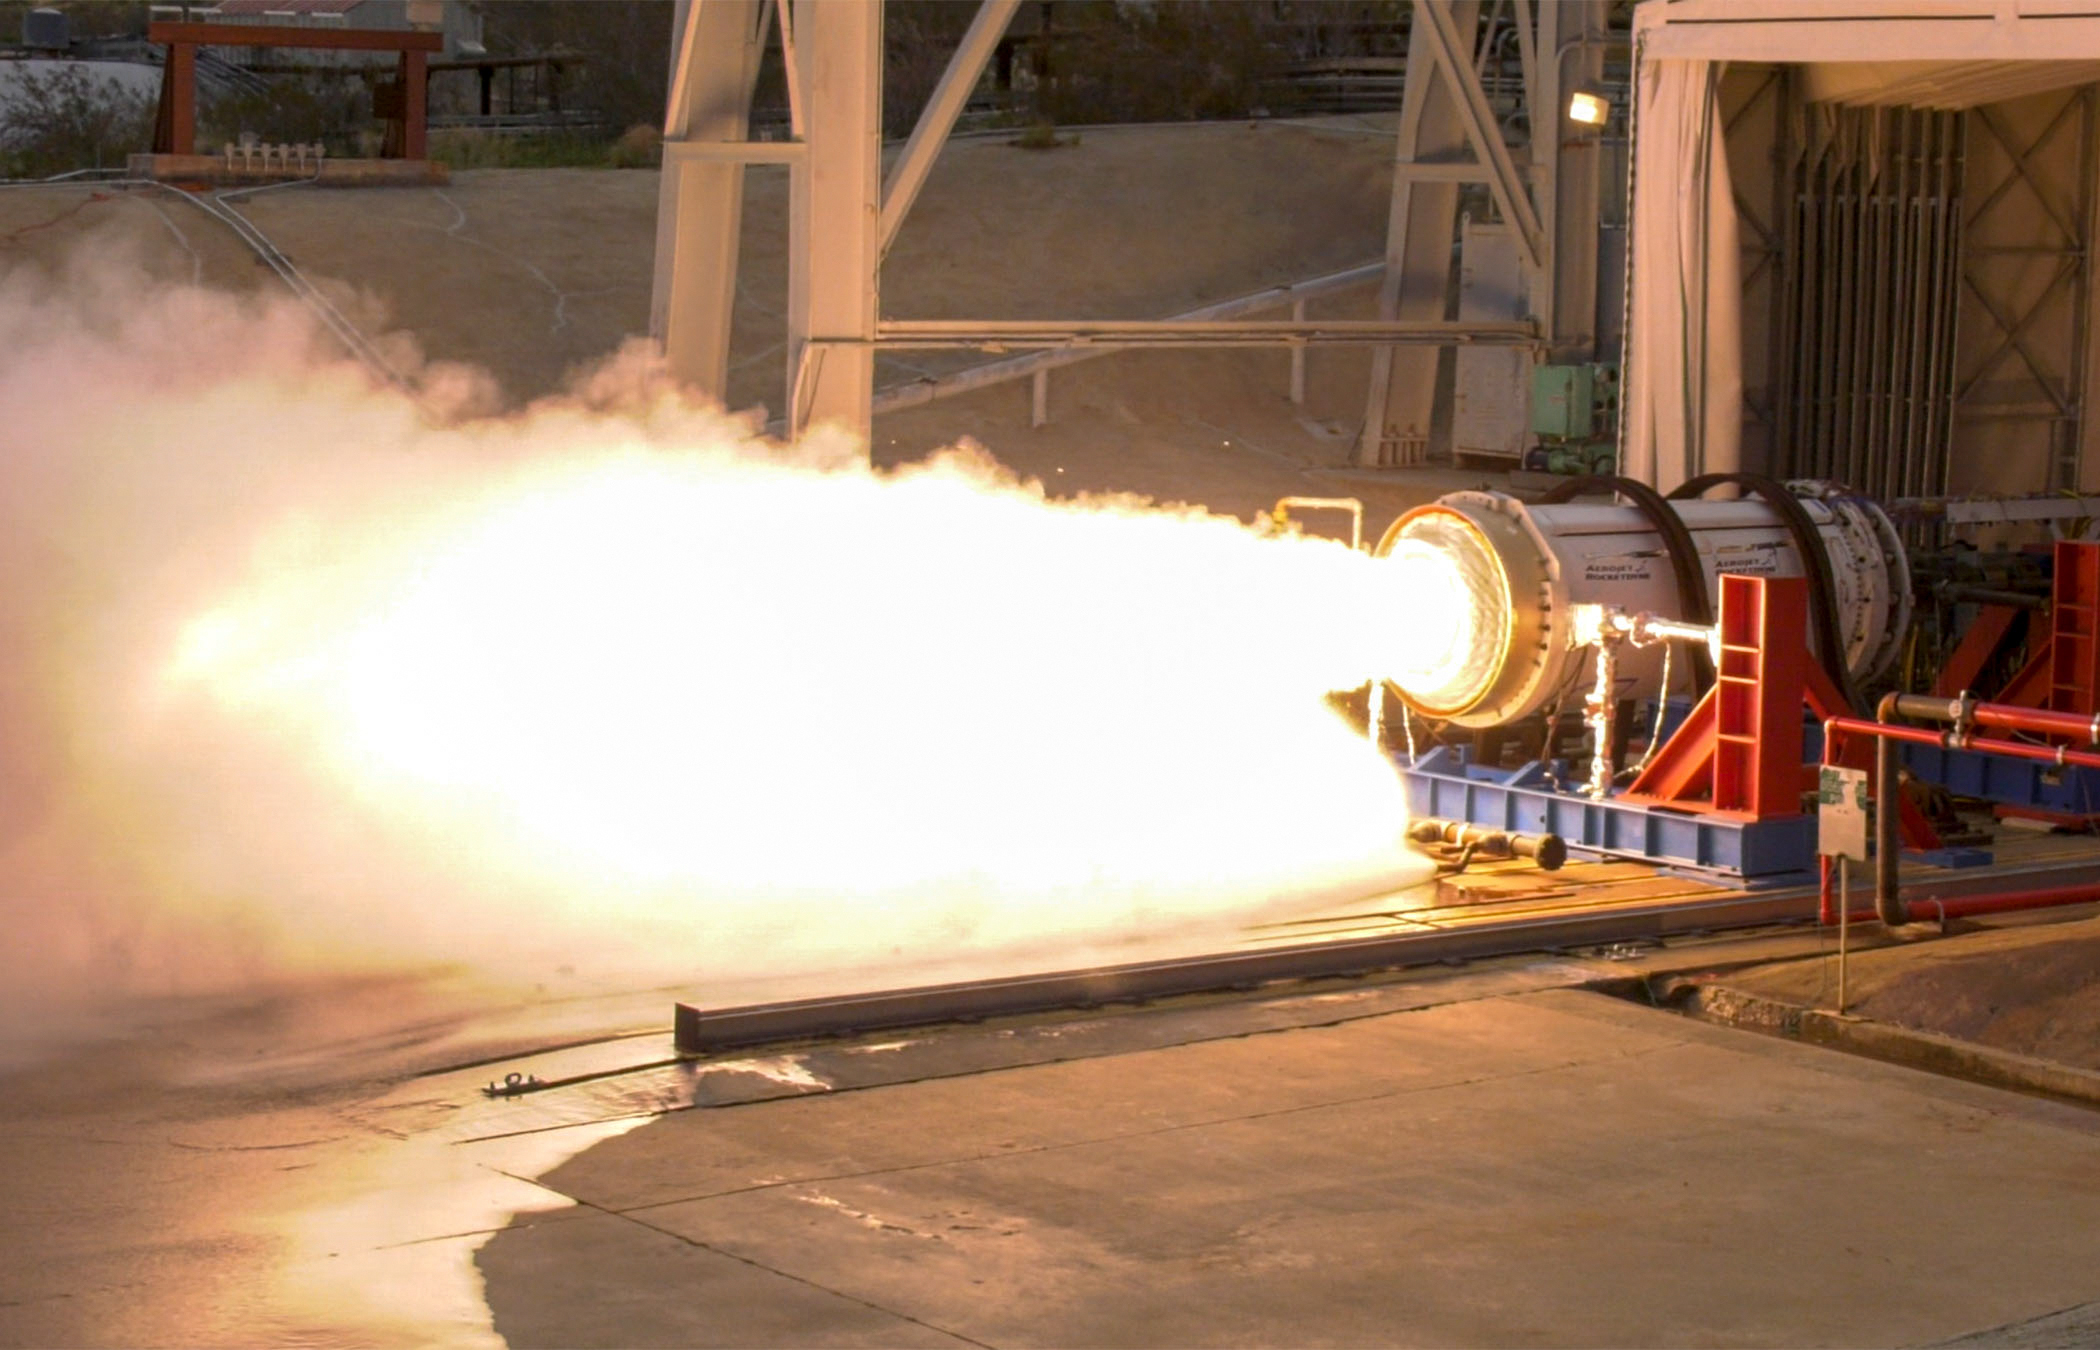 Testing of eSR-19 advanced large solid rocket motor for MDA's next ballistic missile target systems.